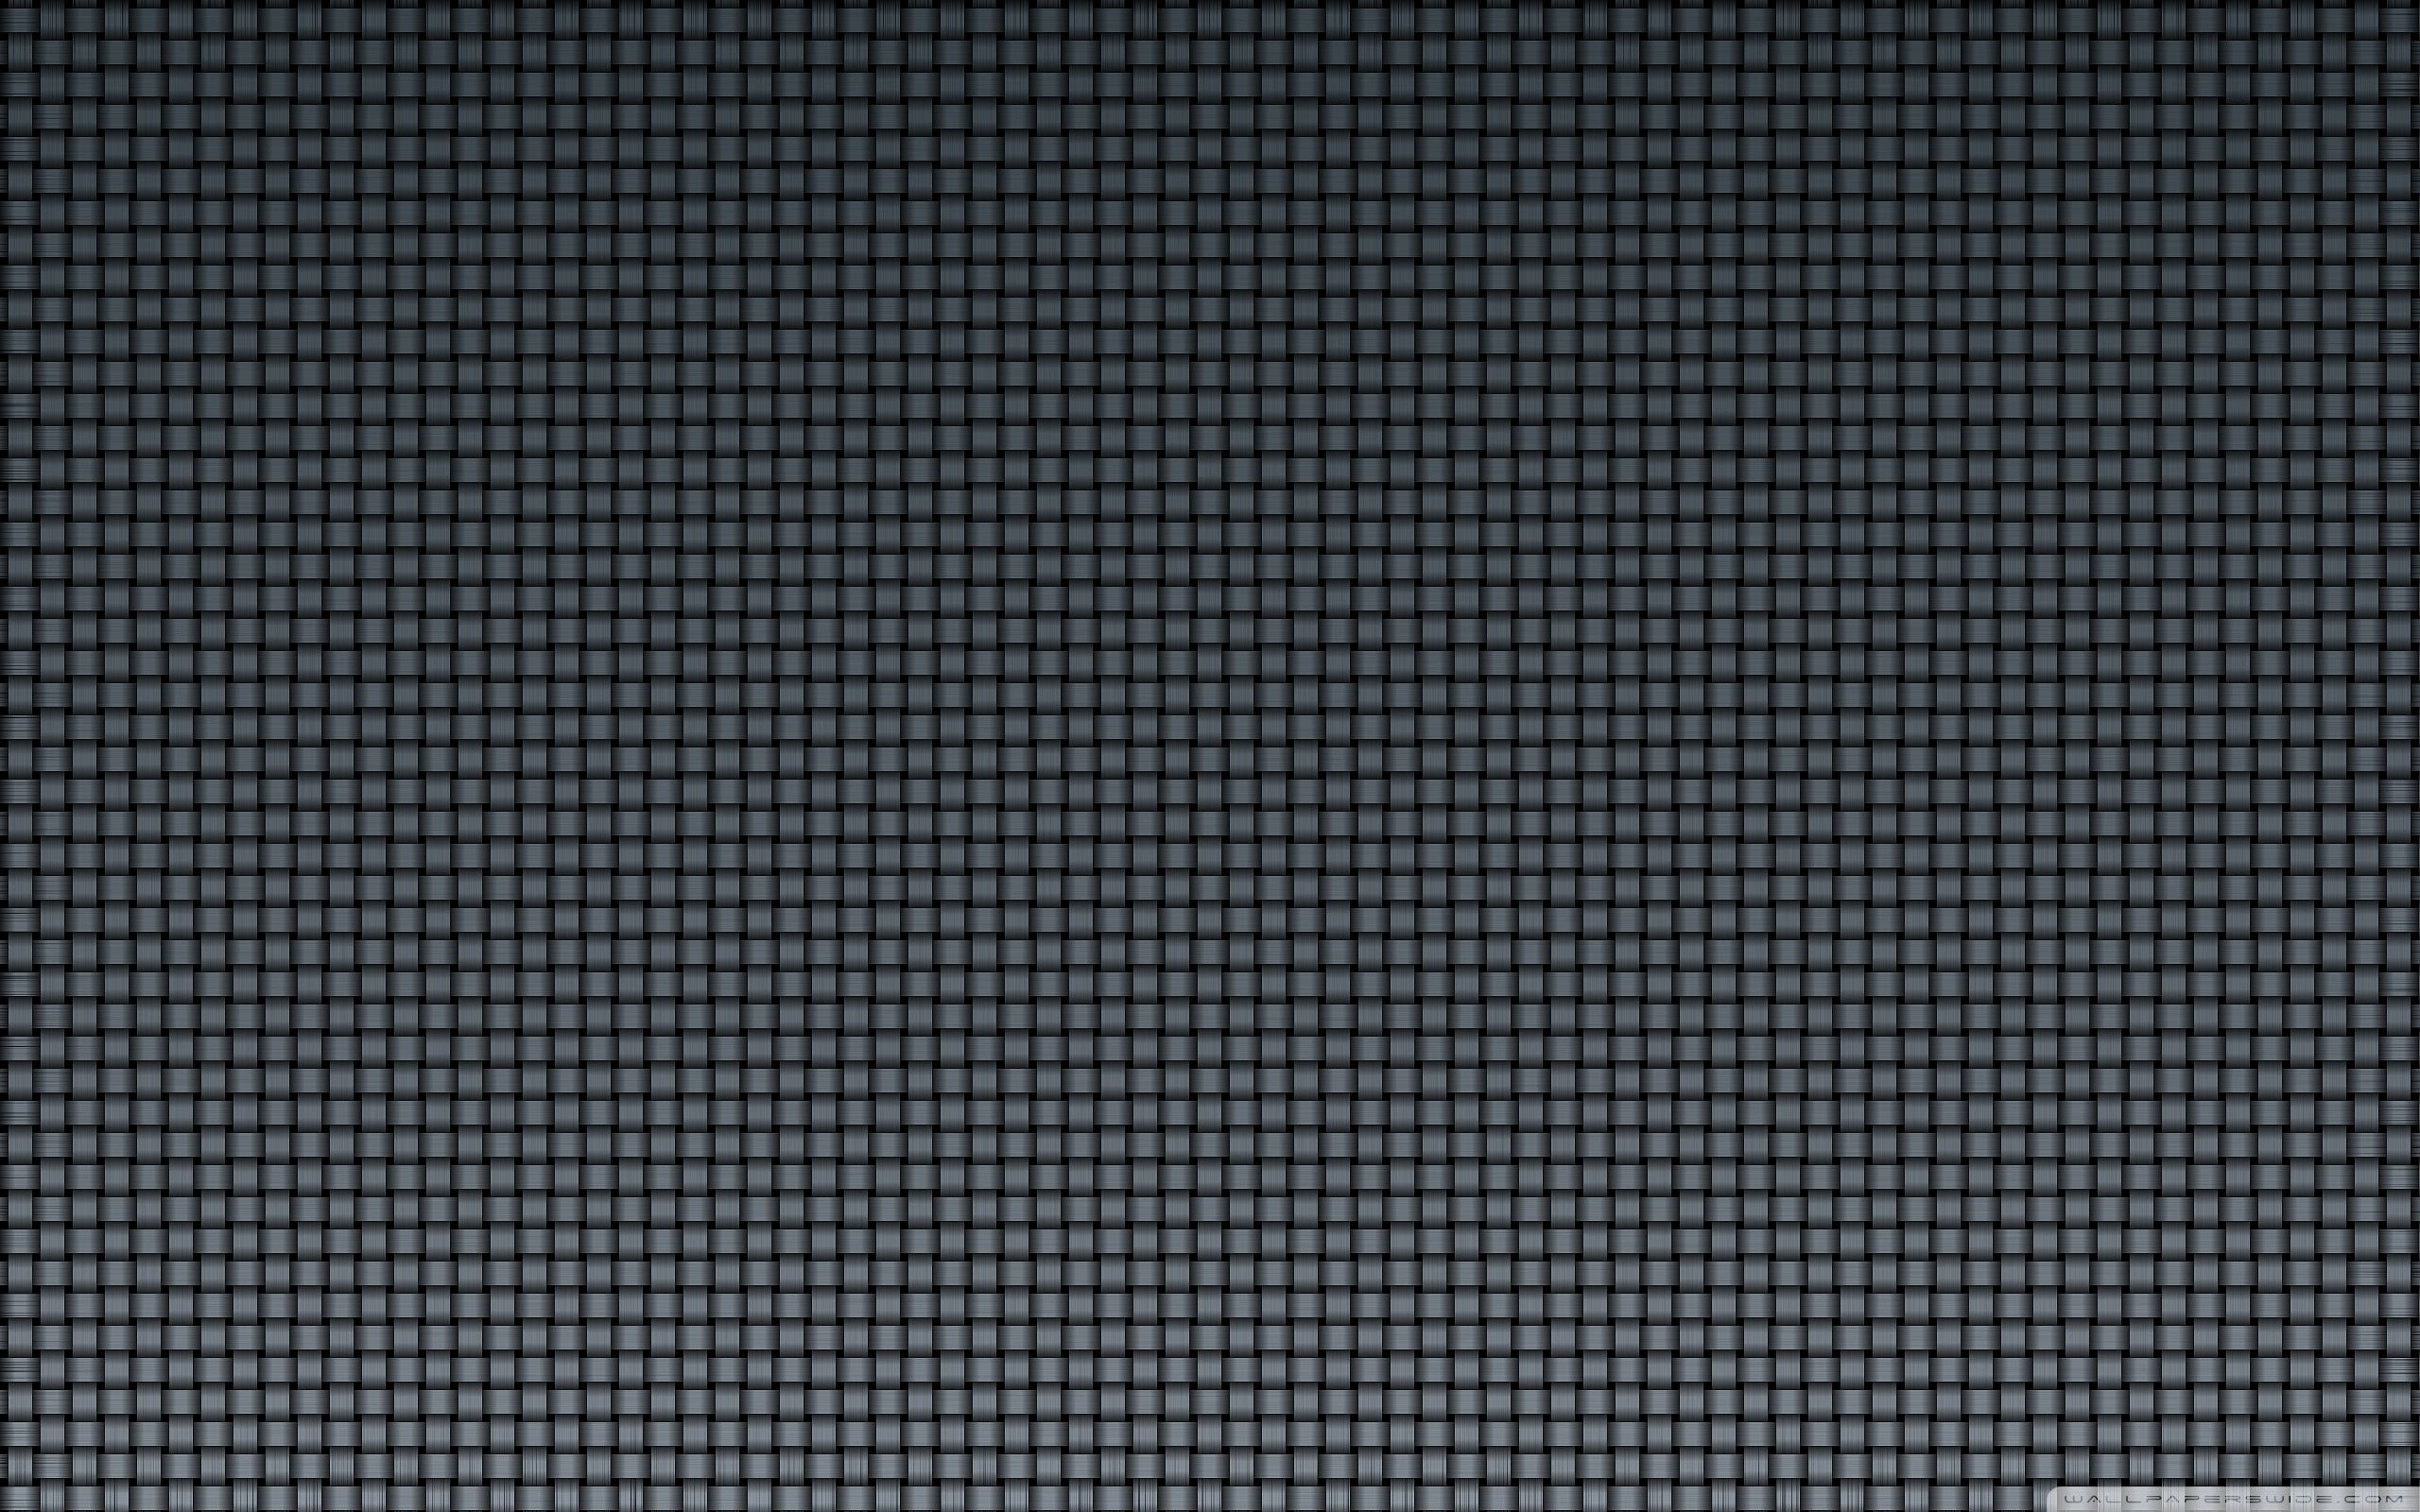 Gray Mesh Ultra HD Desktop Background Wallpaper for 4K UHD TV, Multi Display, Dual Monitor, Tablet